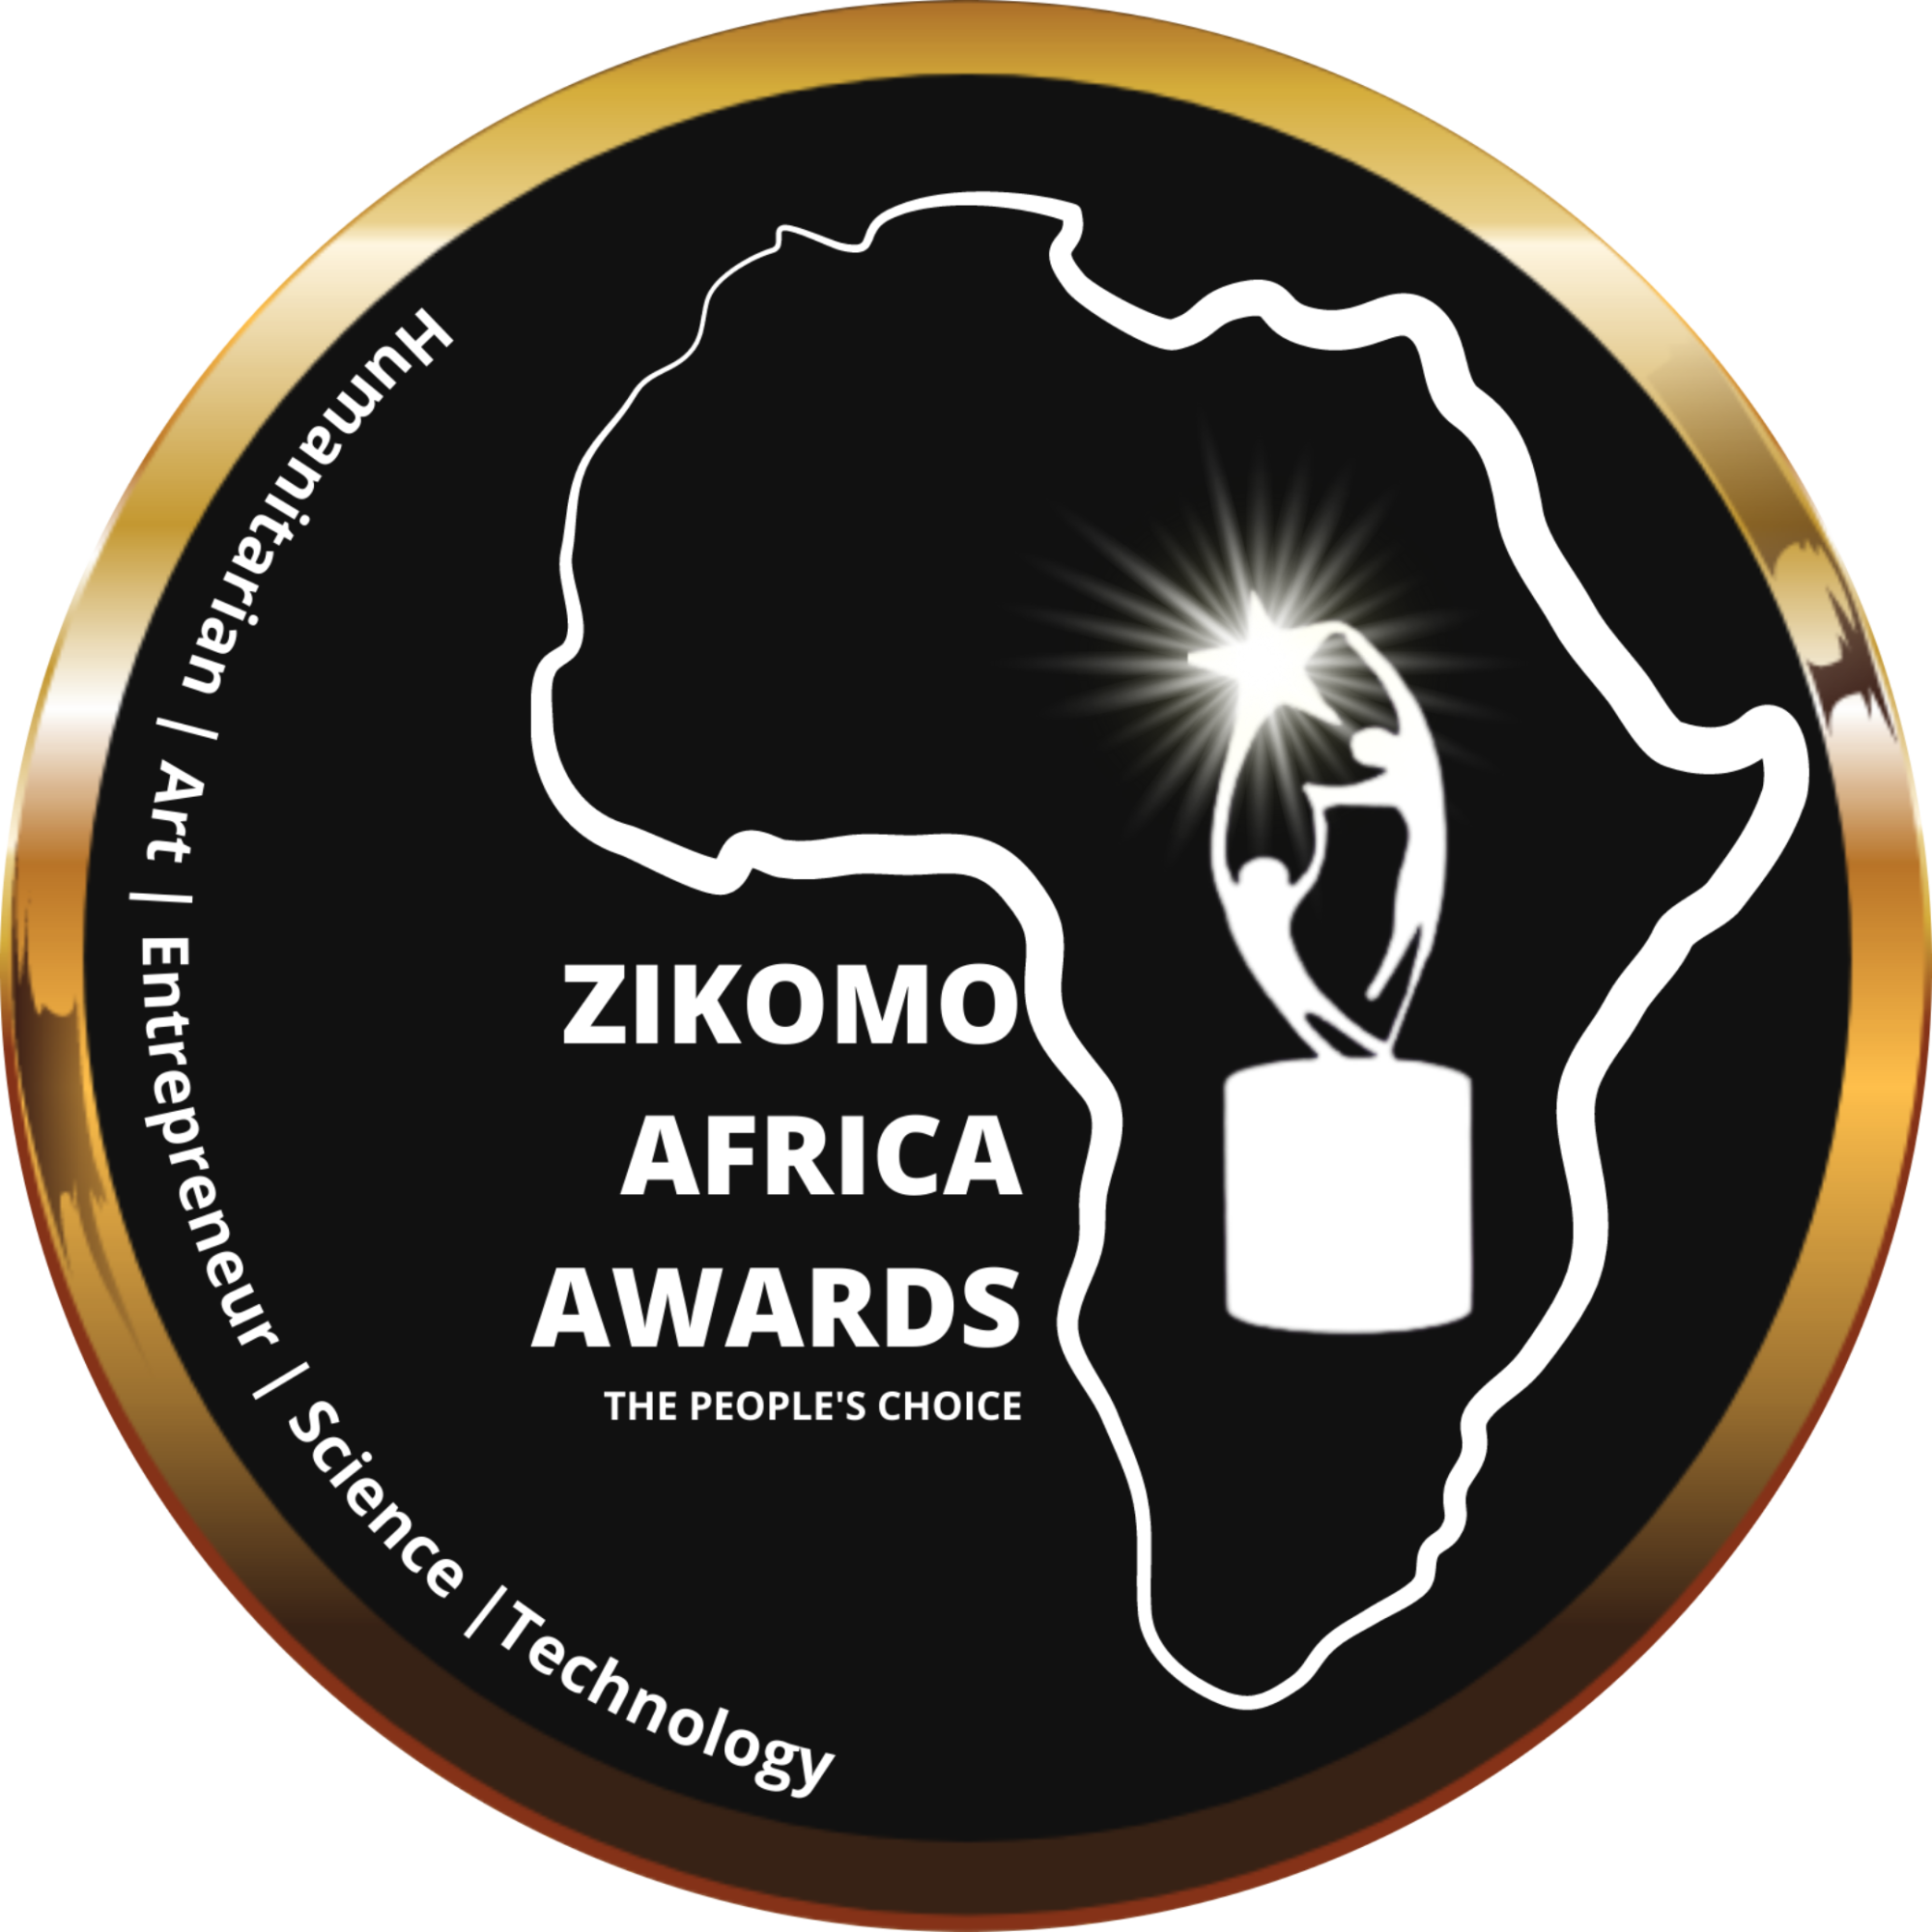 ZIkomo Awards